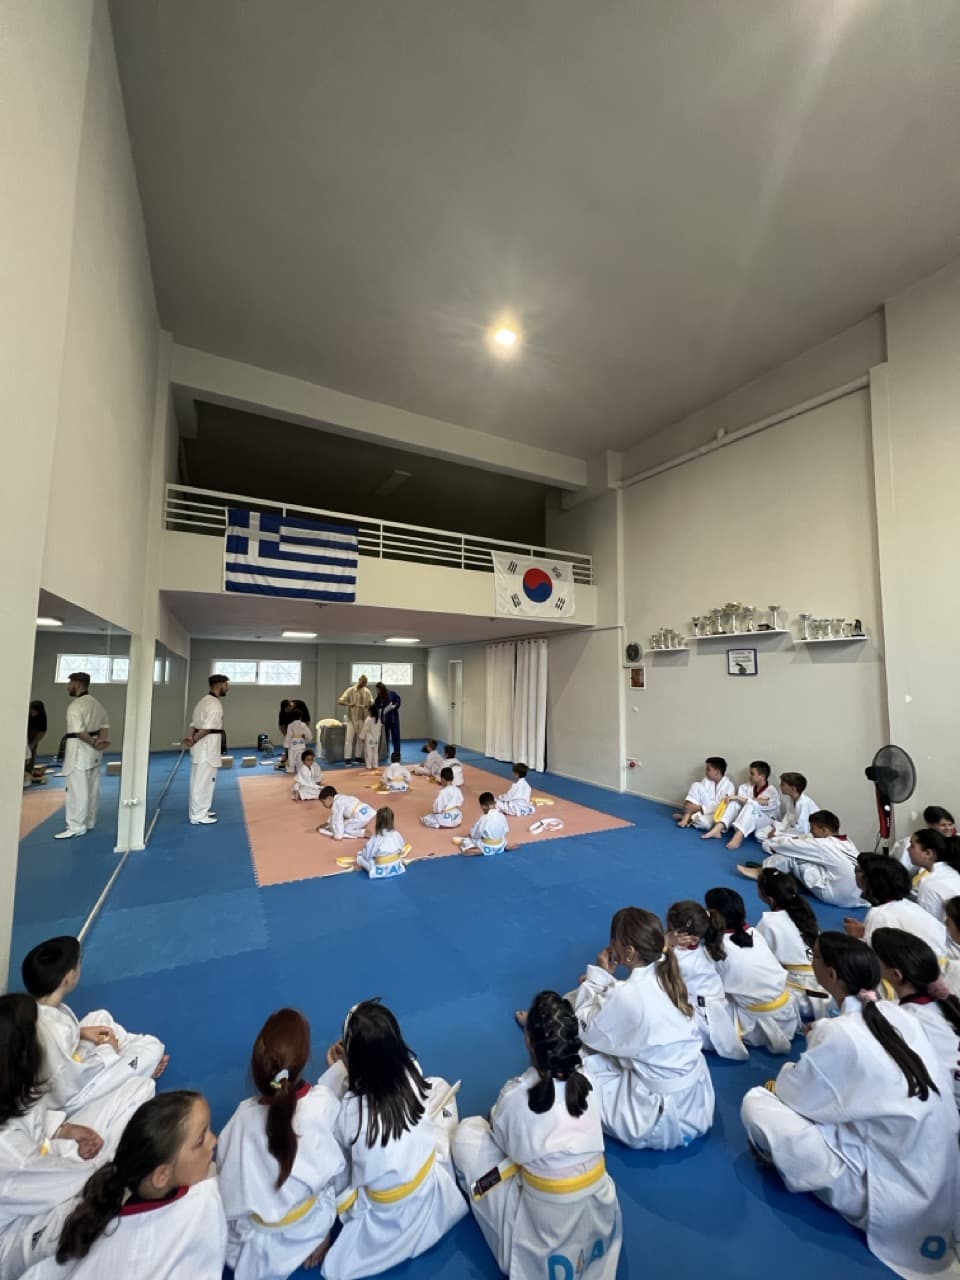 dias-kalamatas-taekwondo-sportshunter3